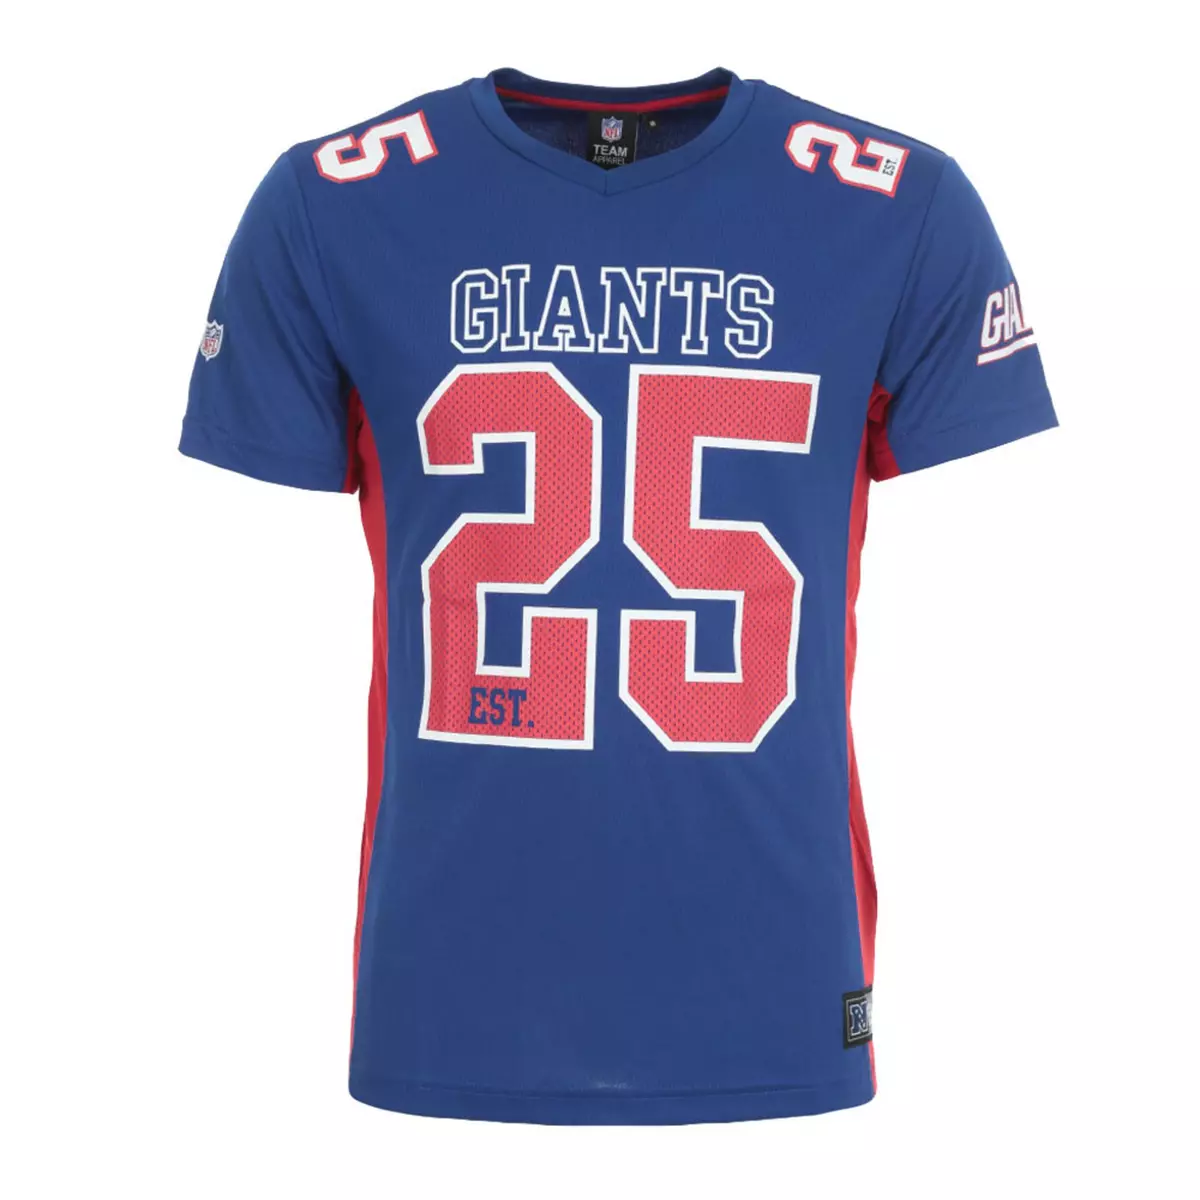  Maillot Bleu/Rouge Homme NFL NY Giants